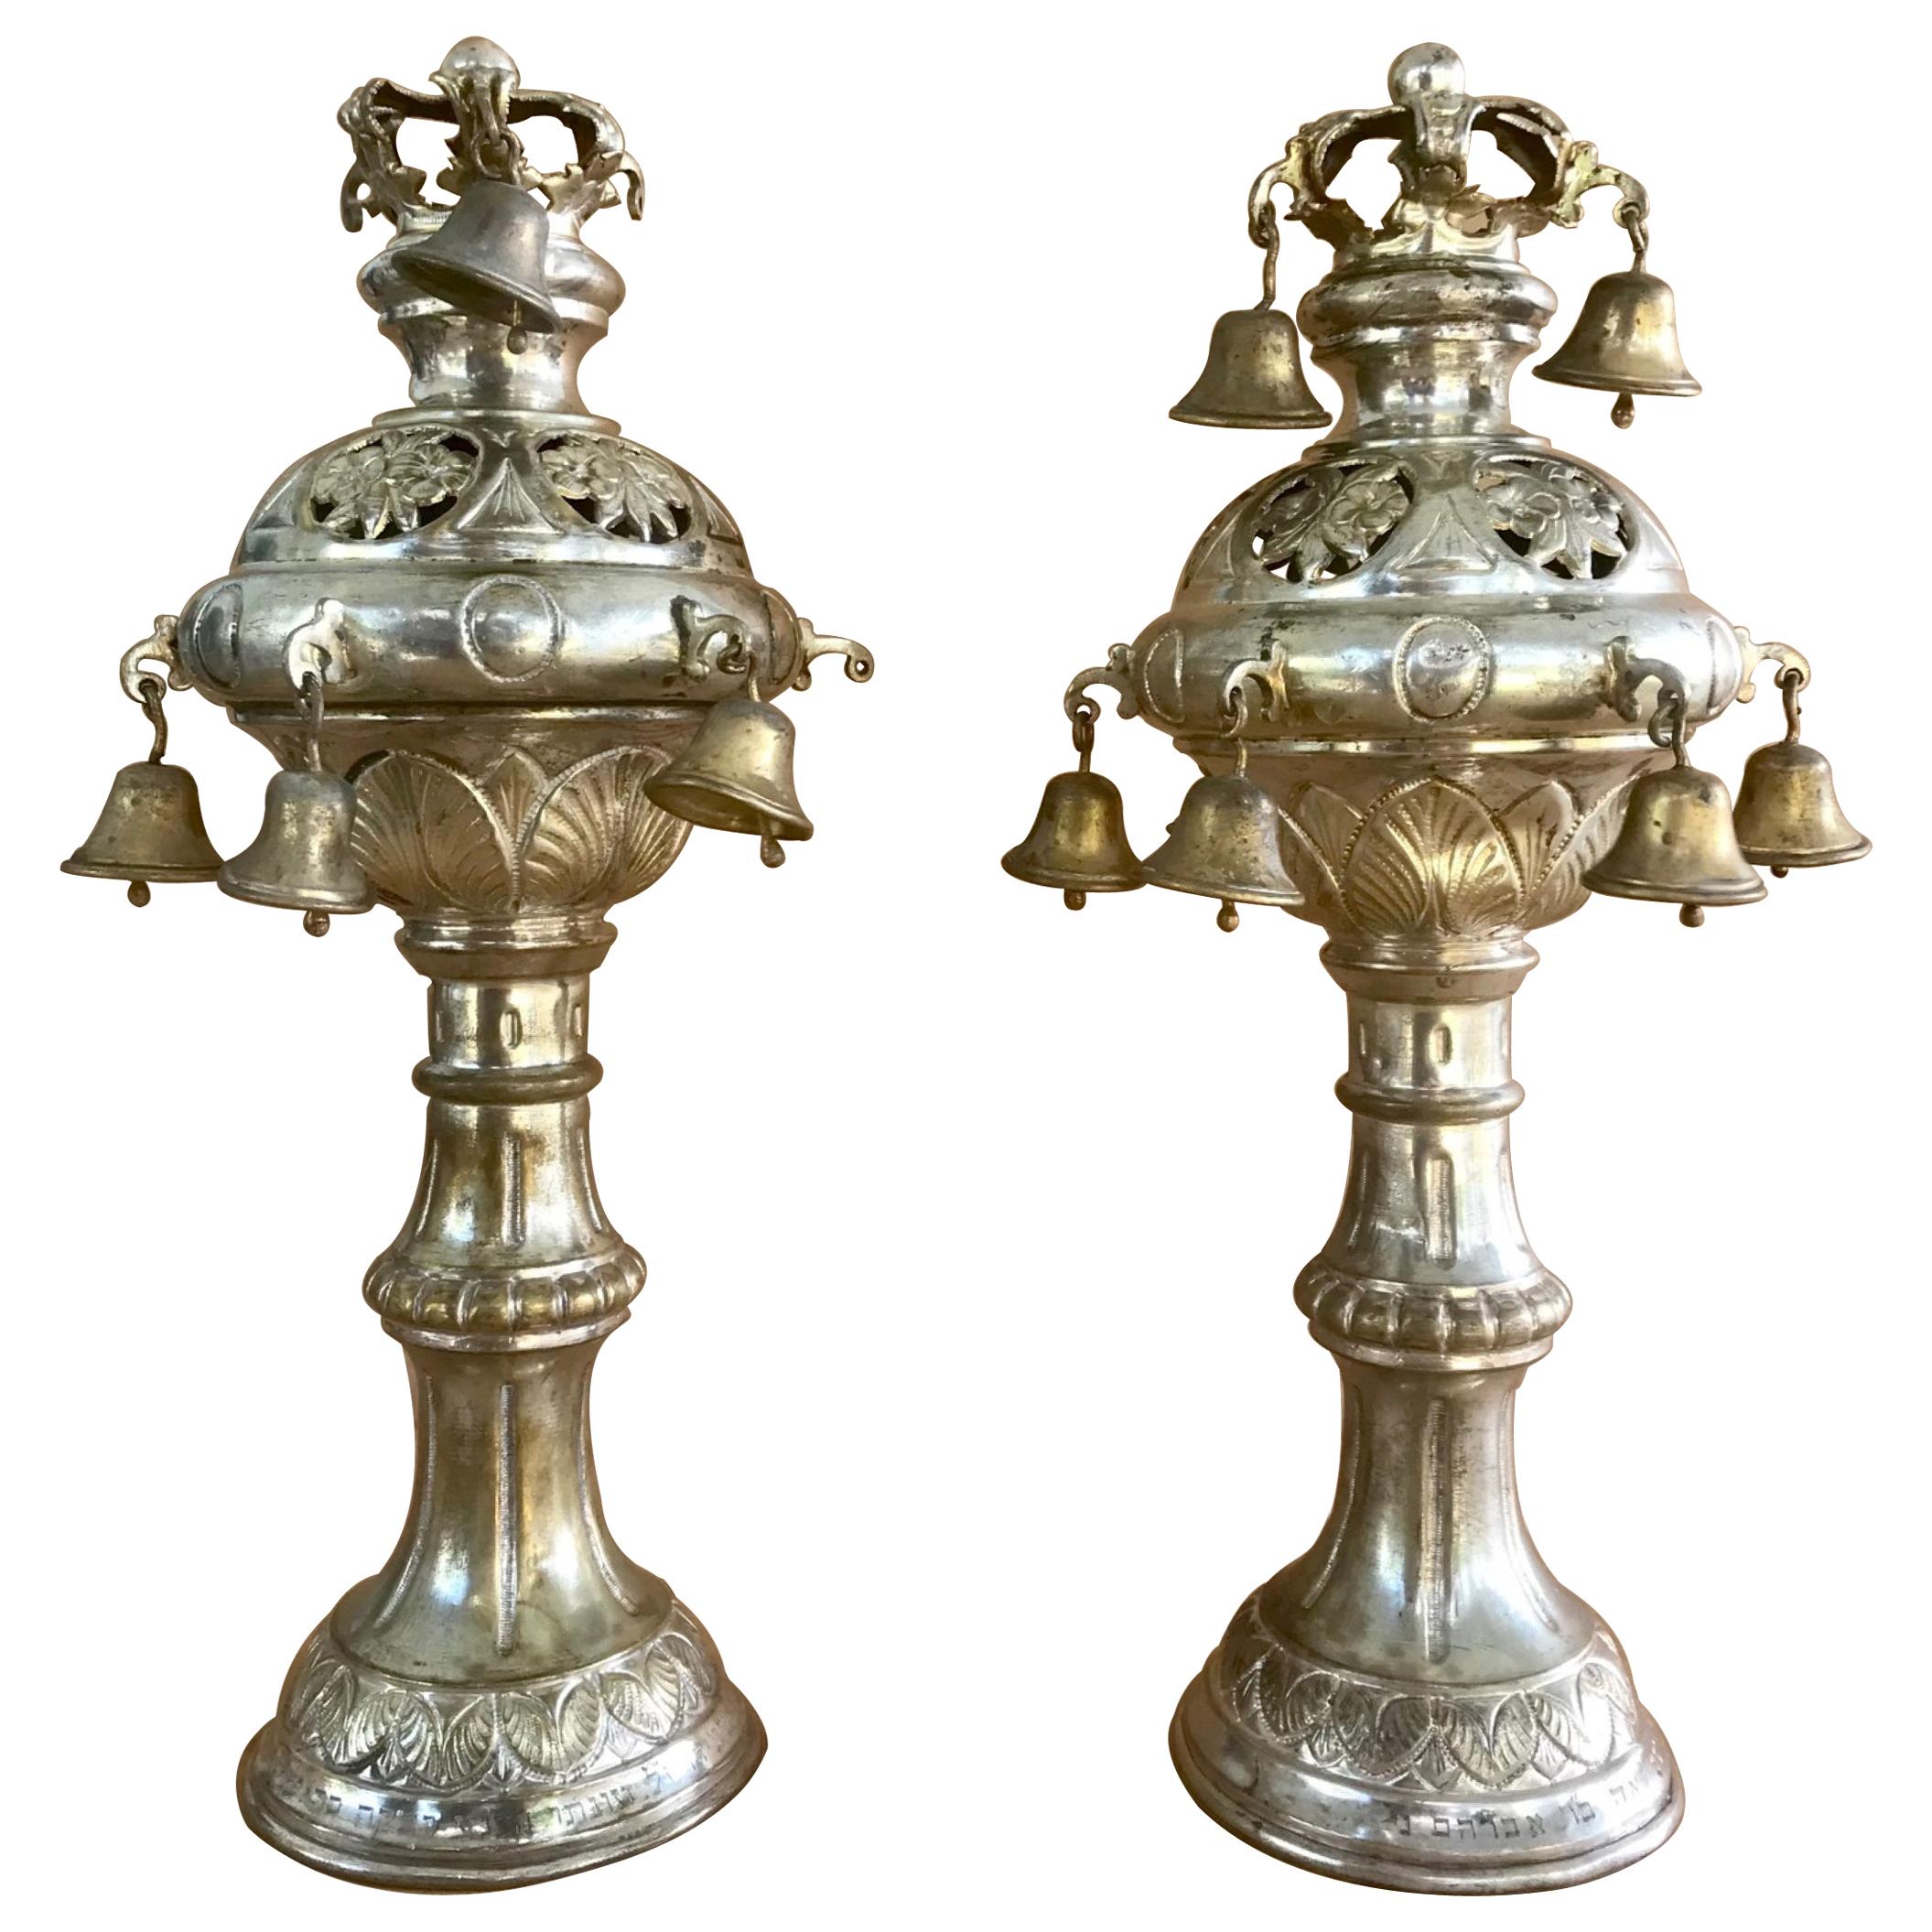 Original Pair of Silver Plated Brass Torah Finials, Rimonim